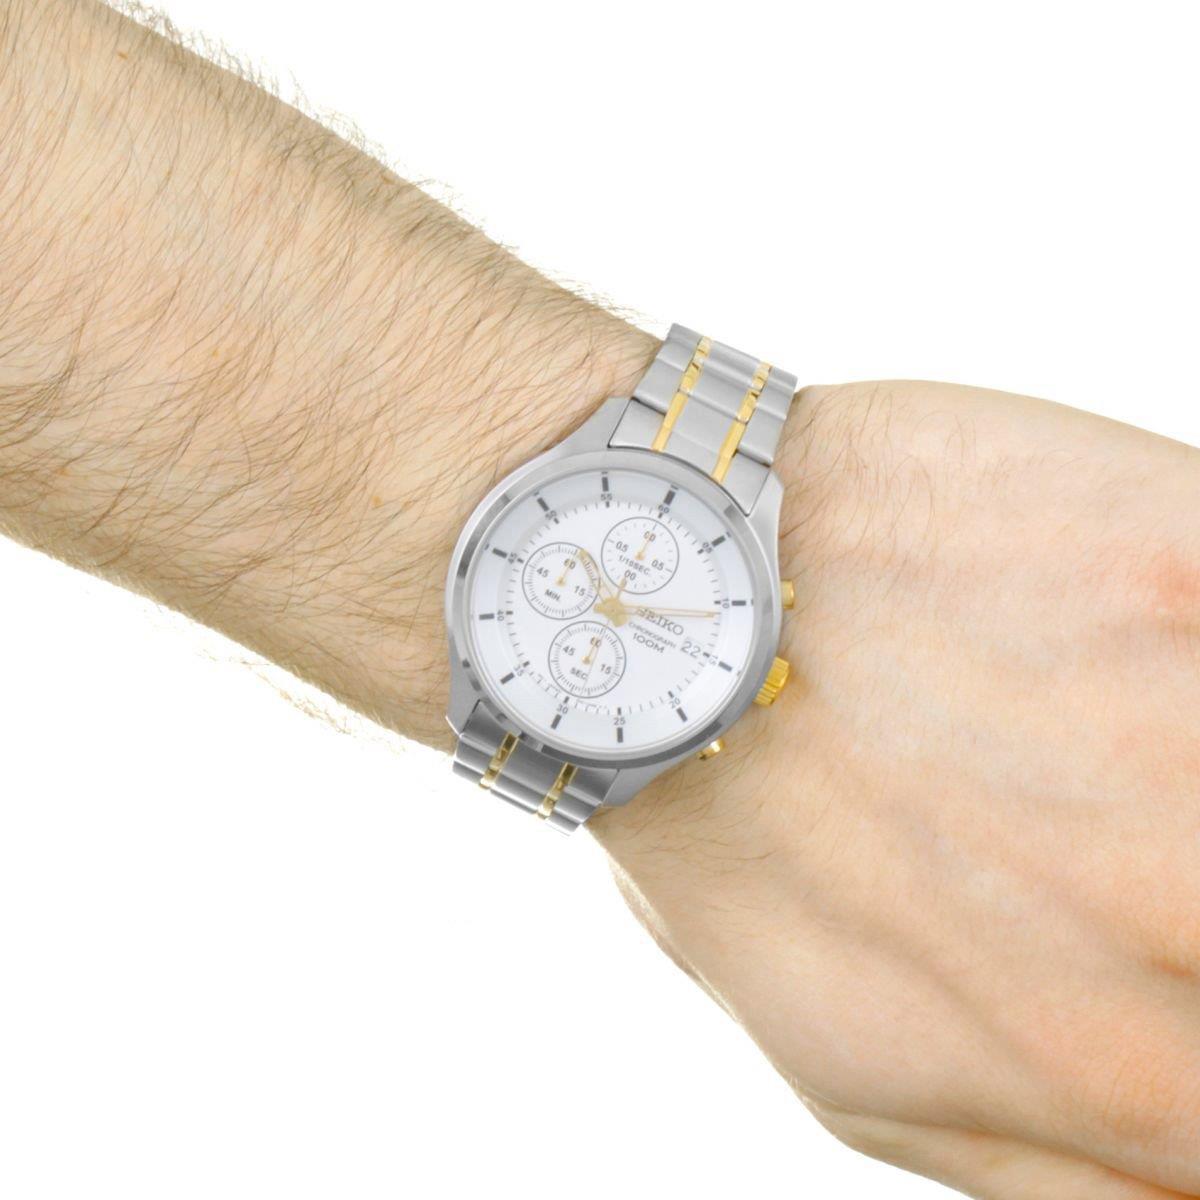 Seiko Mens Chronograph Fashion Stainless Steel Bracelet Watch Sks541p1